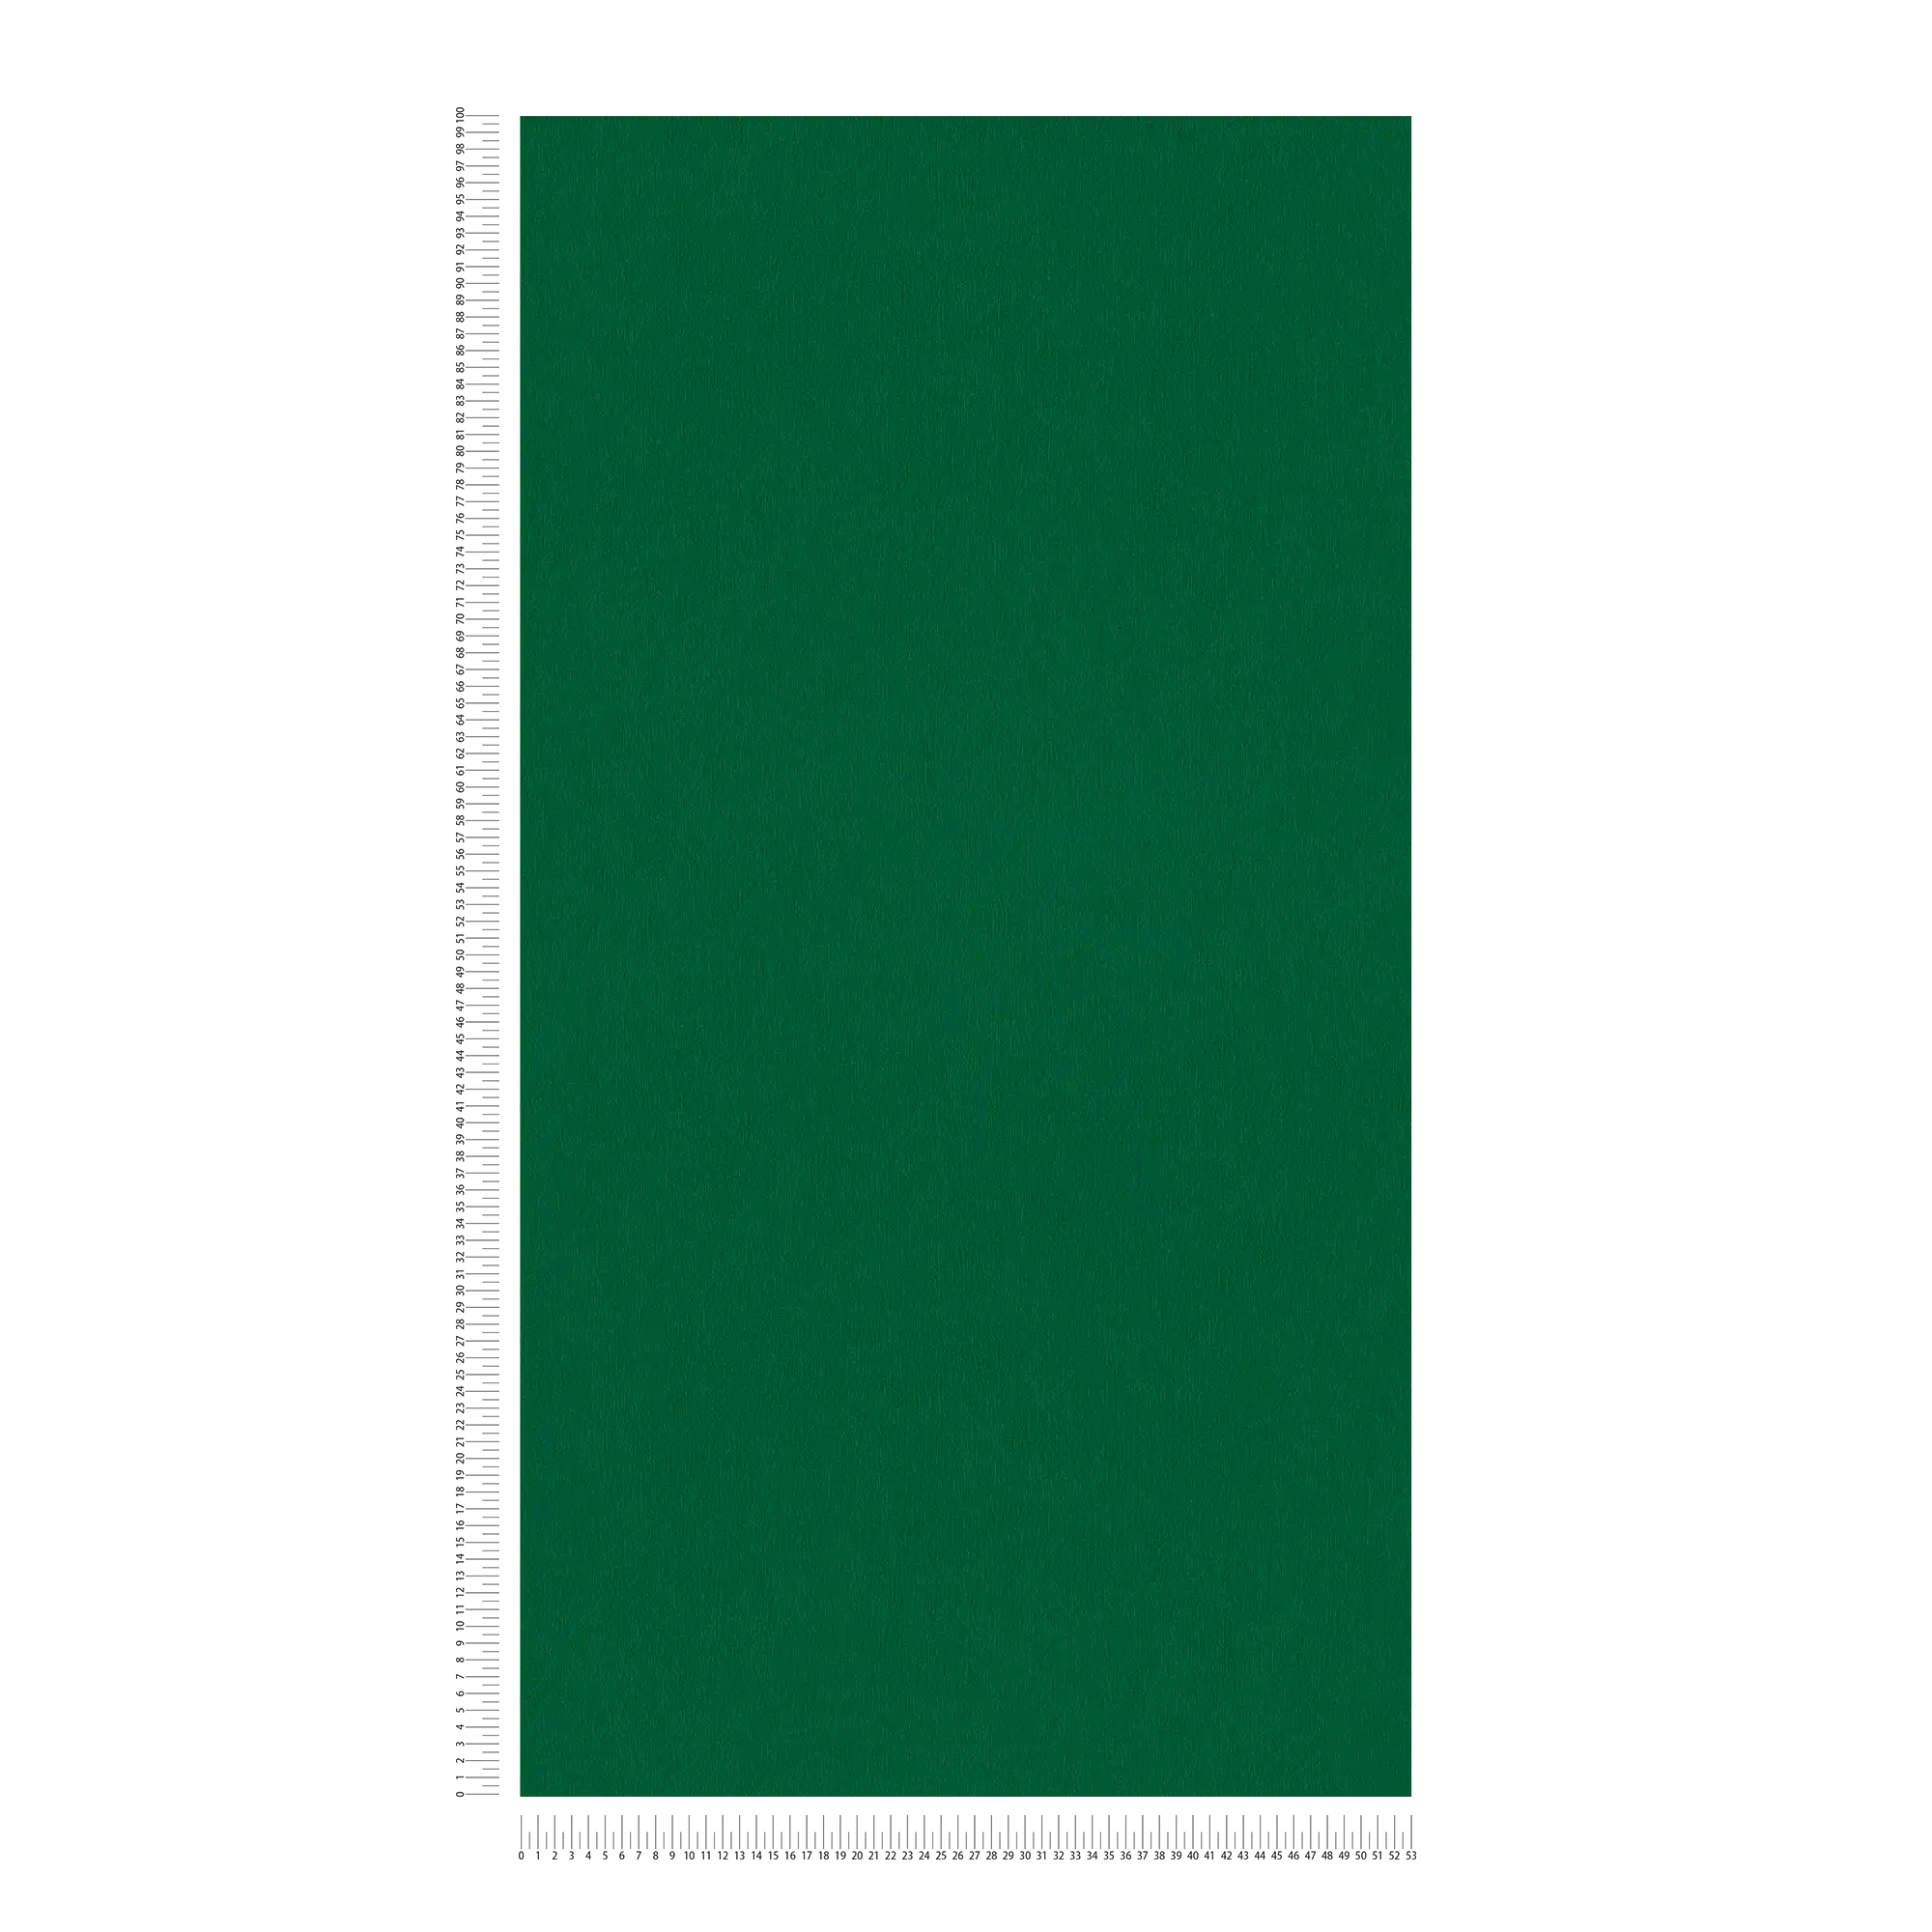             Wallpaper dark green plain, satin & smooth - green
        